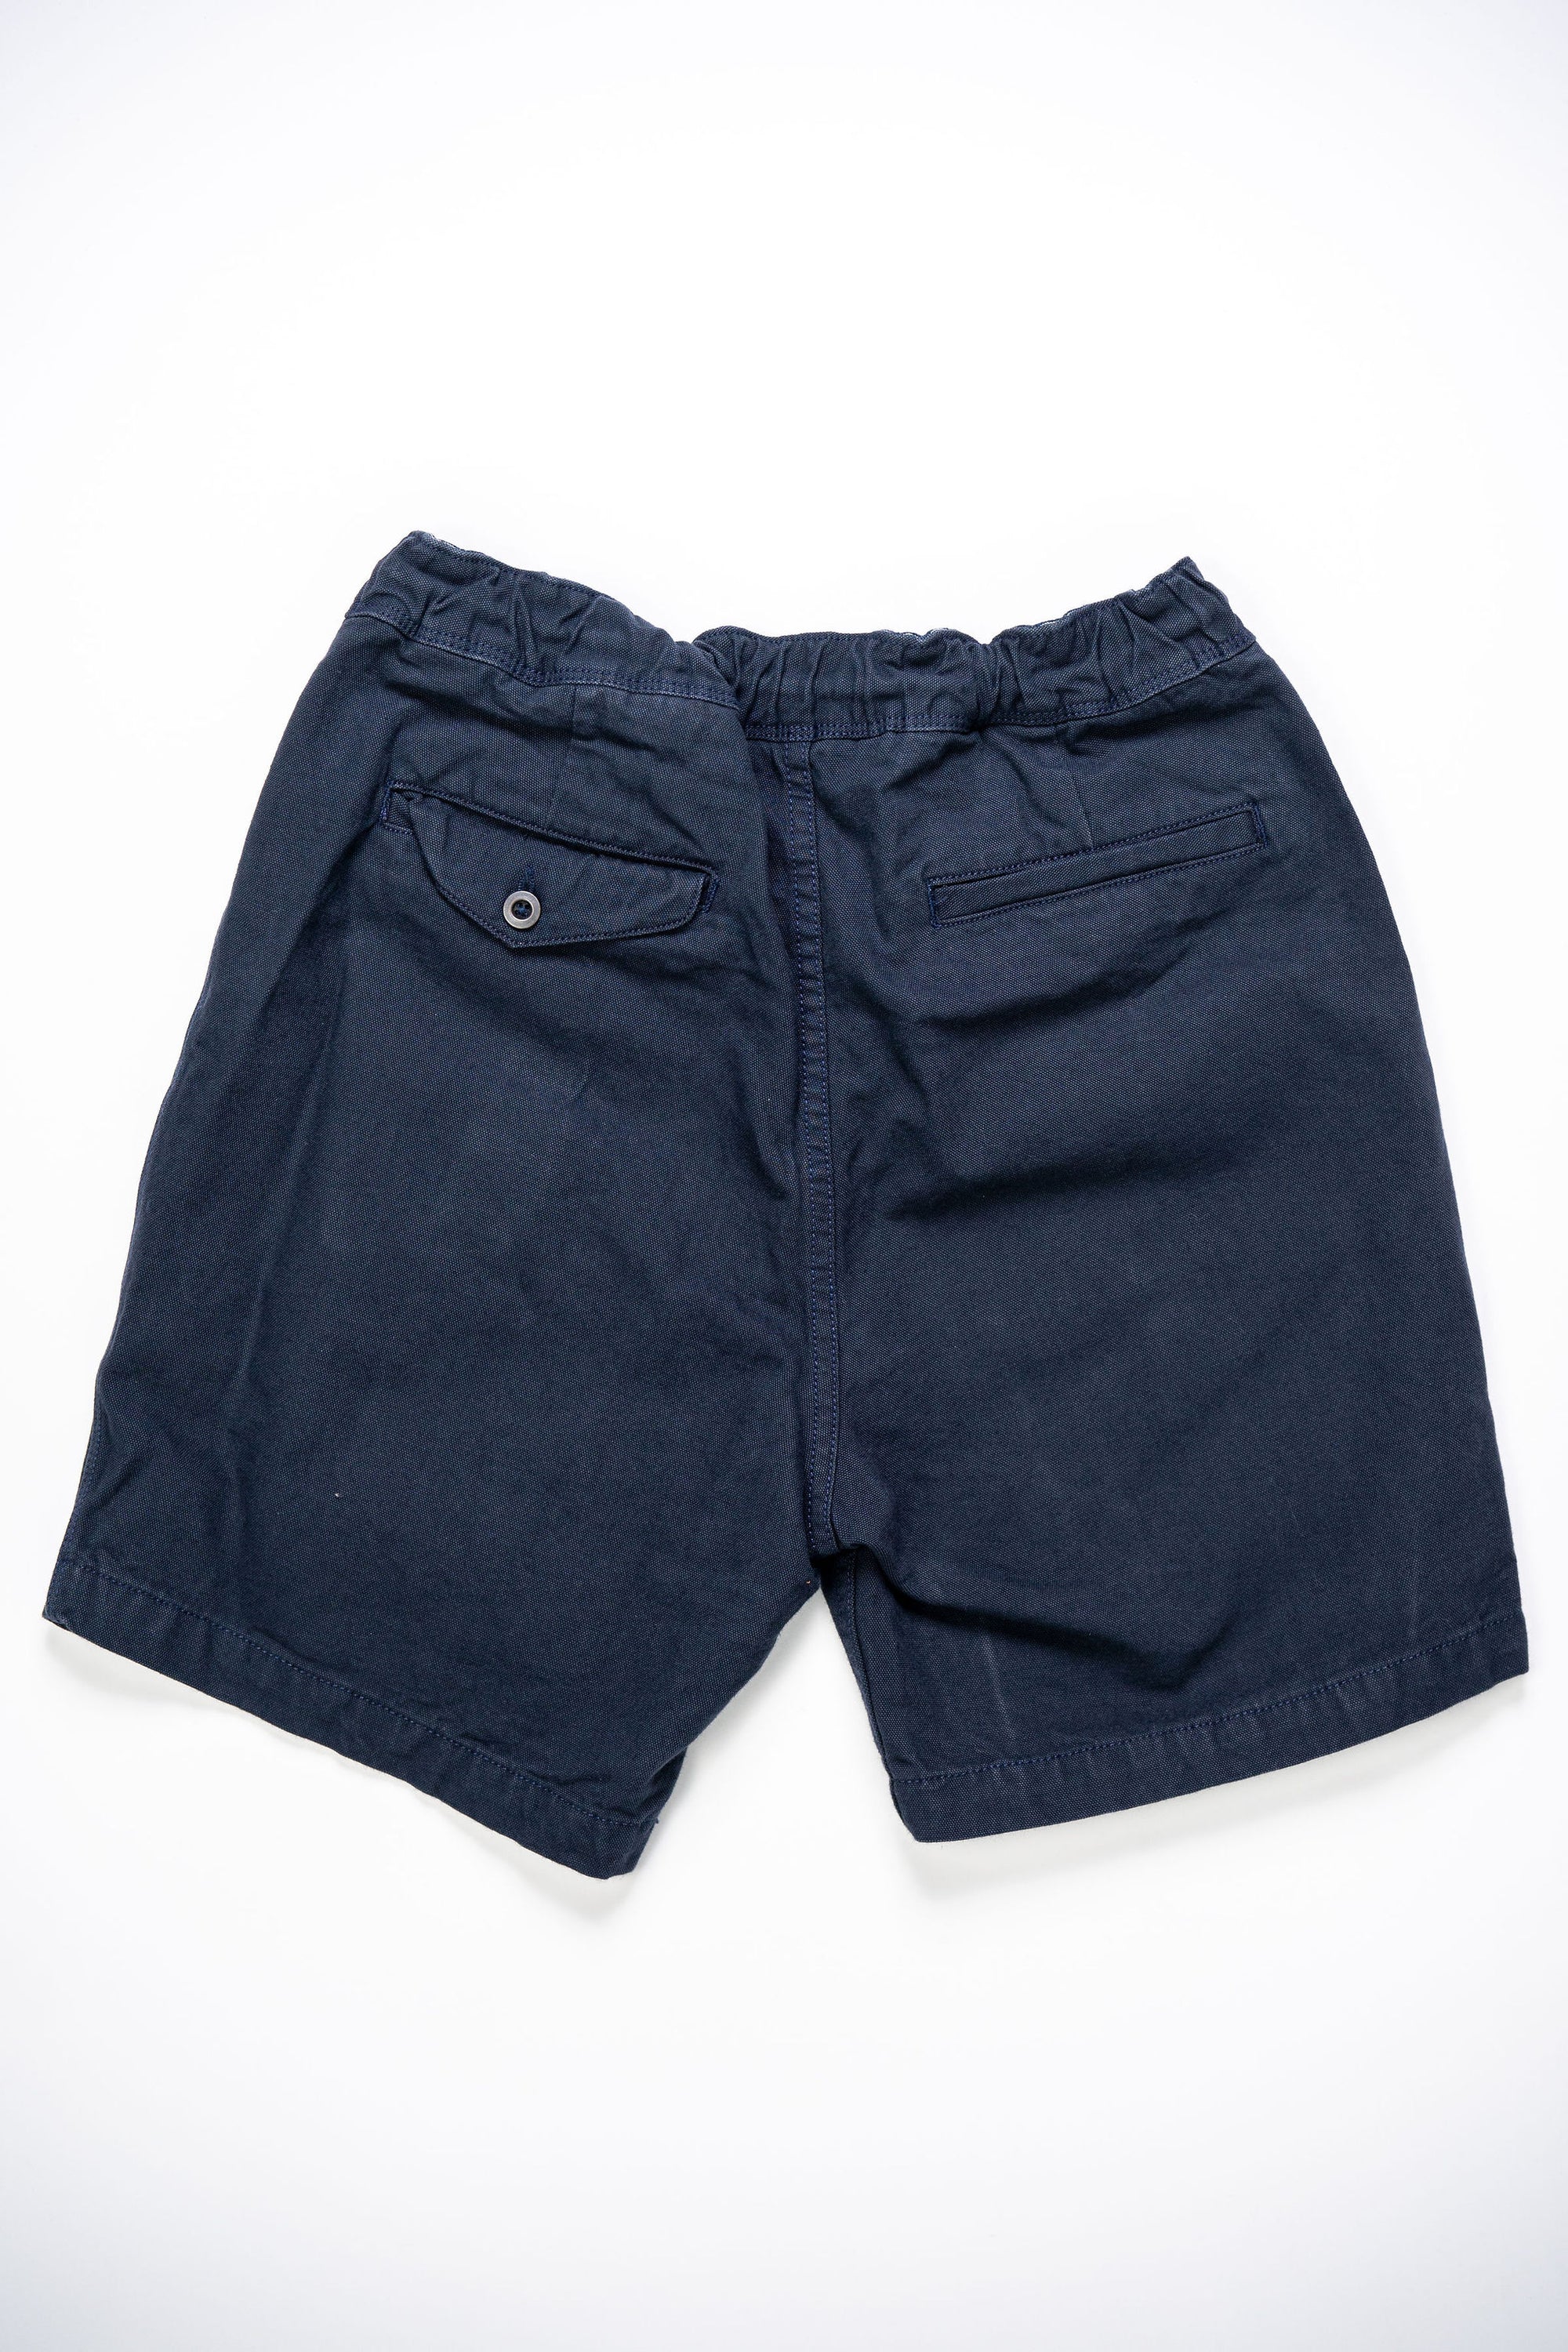 Freenote Cloth Deck Shorts - Navy